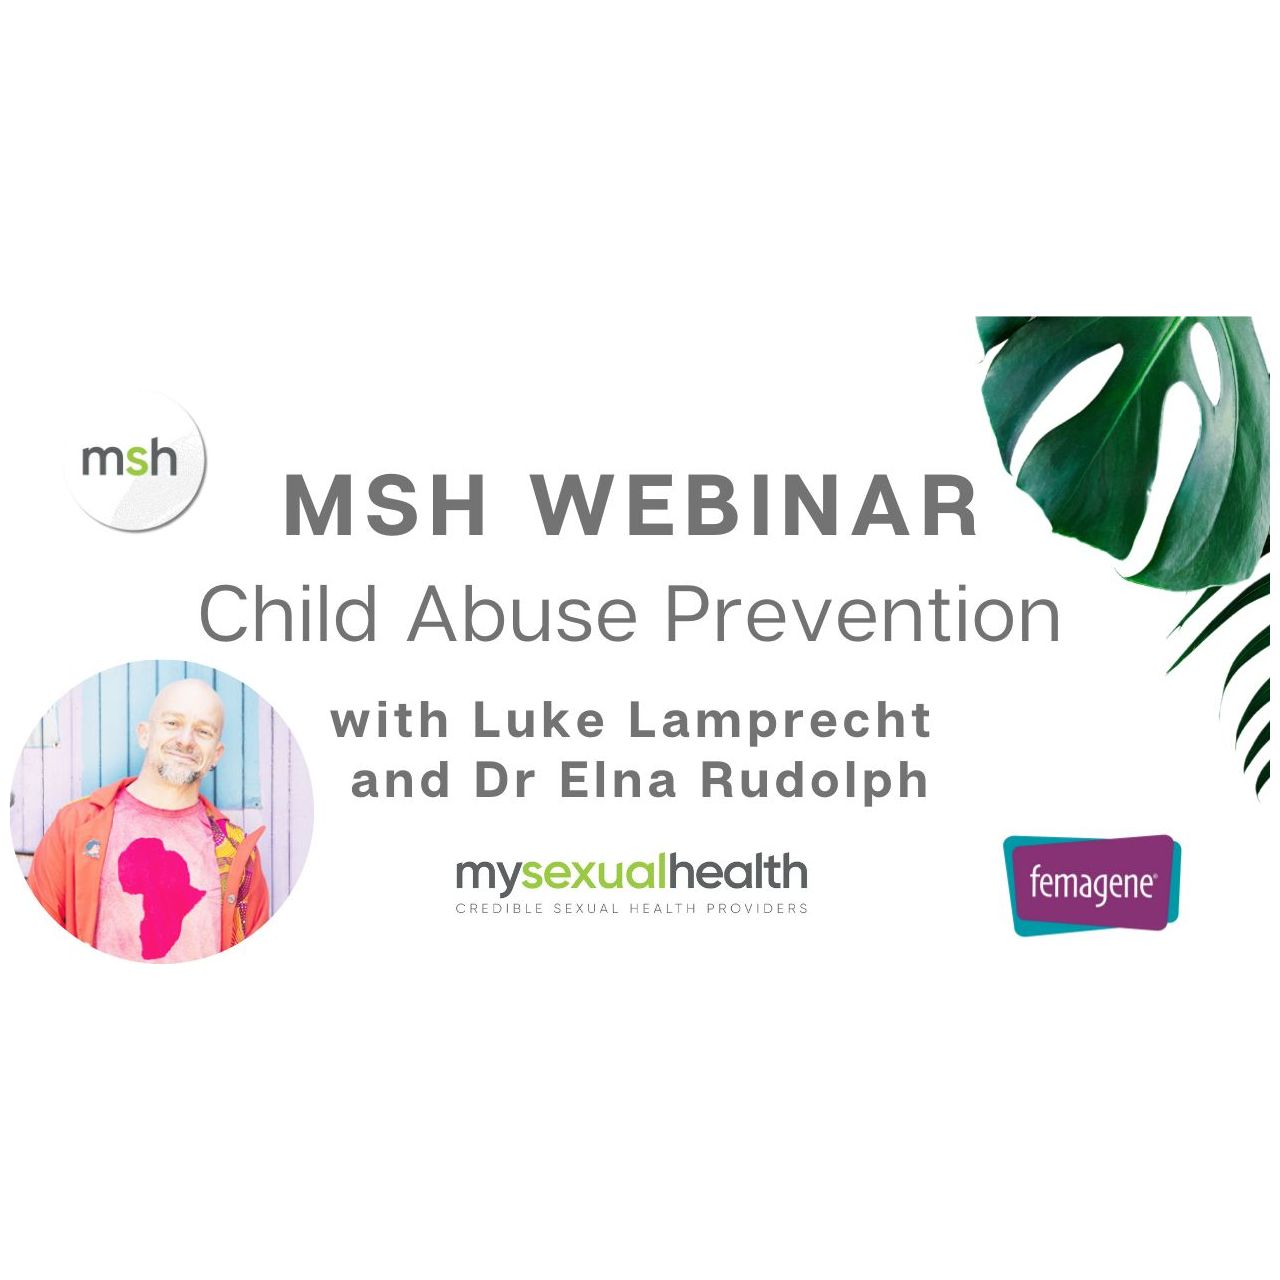 MSH WEBINAR: Child Abuse Prevention with Luke Lamprecht